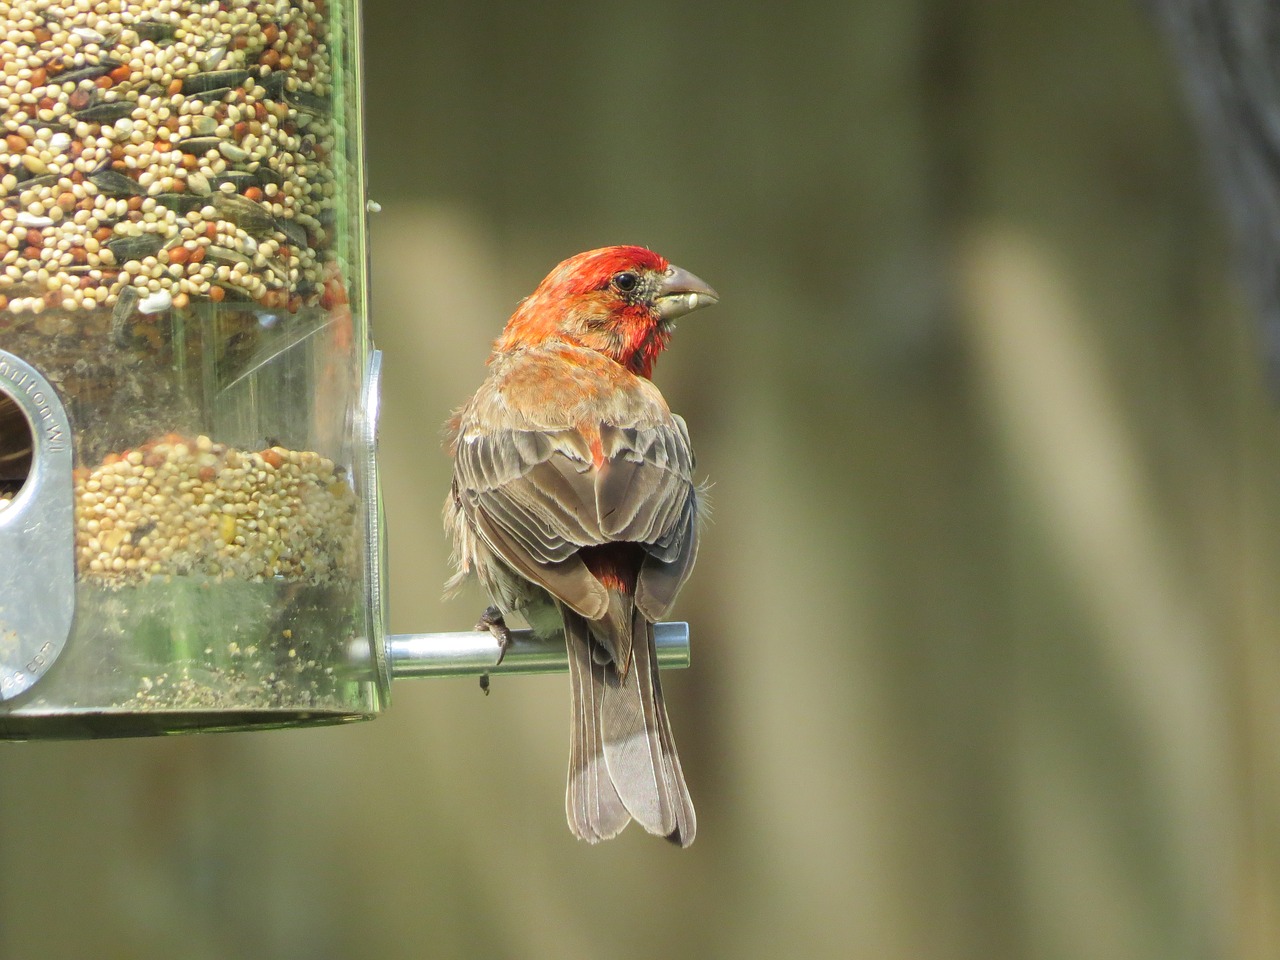 bird scarlet and gray wildlife free photo